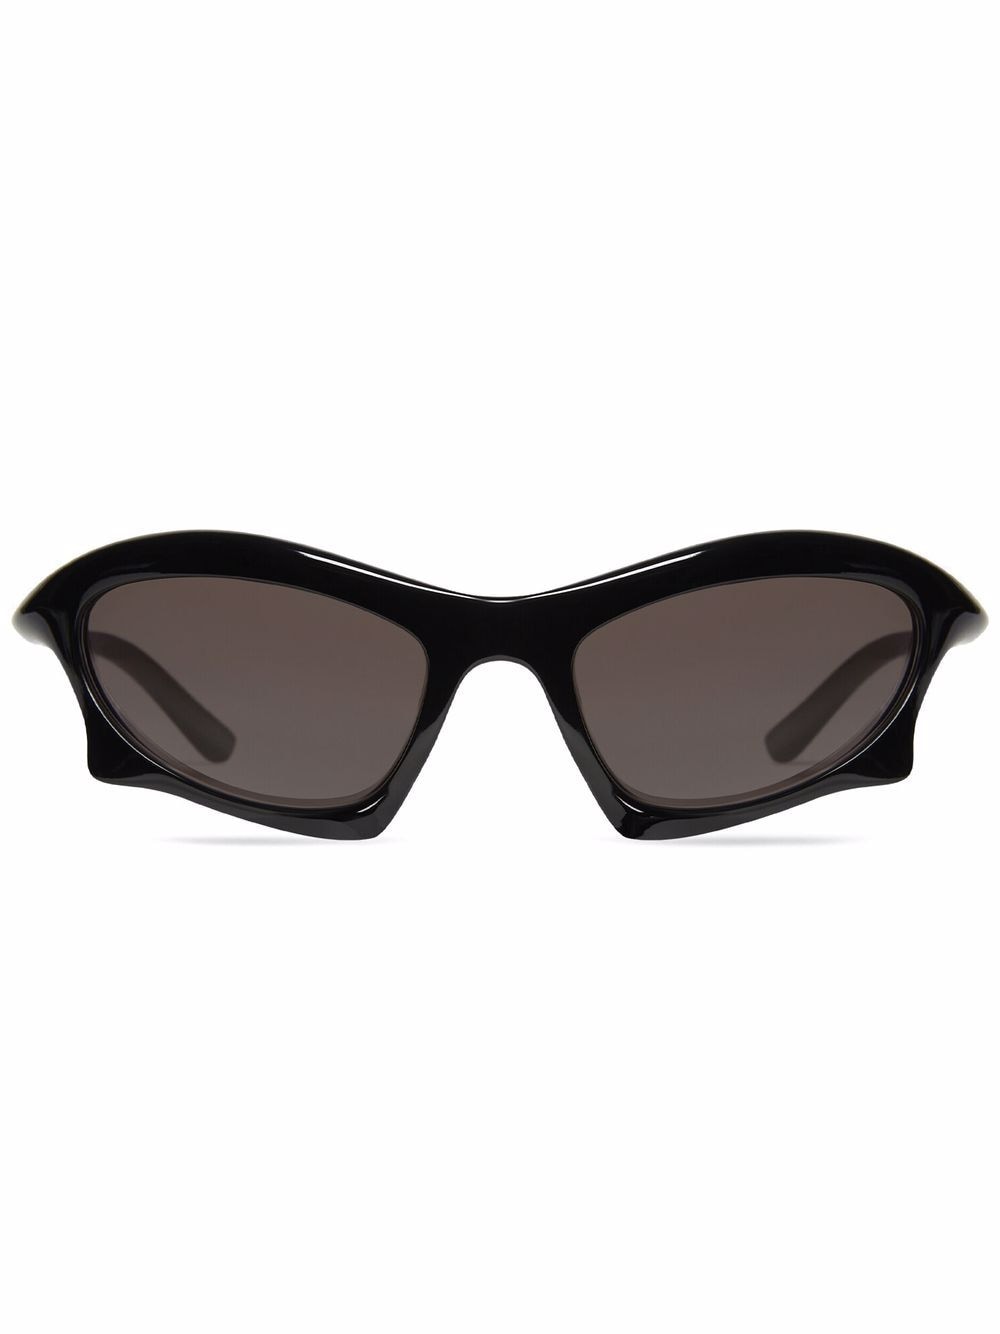 Black acetate Bat rectangle sunglasses